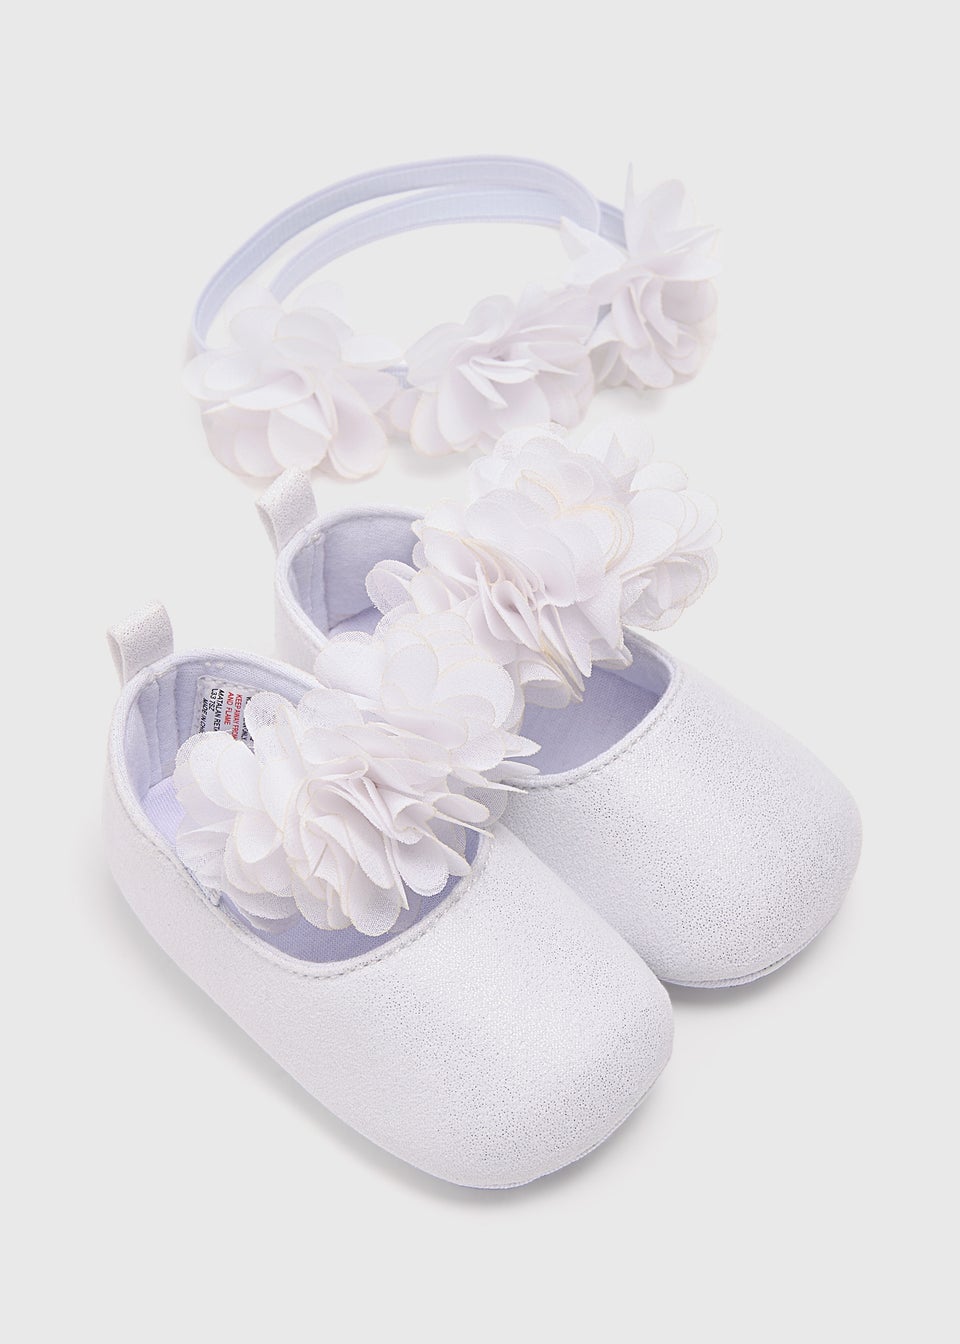 Baby White Shoes & Head Band Gift Set (Newborn-18mths)